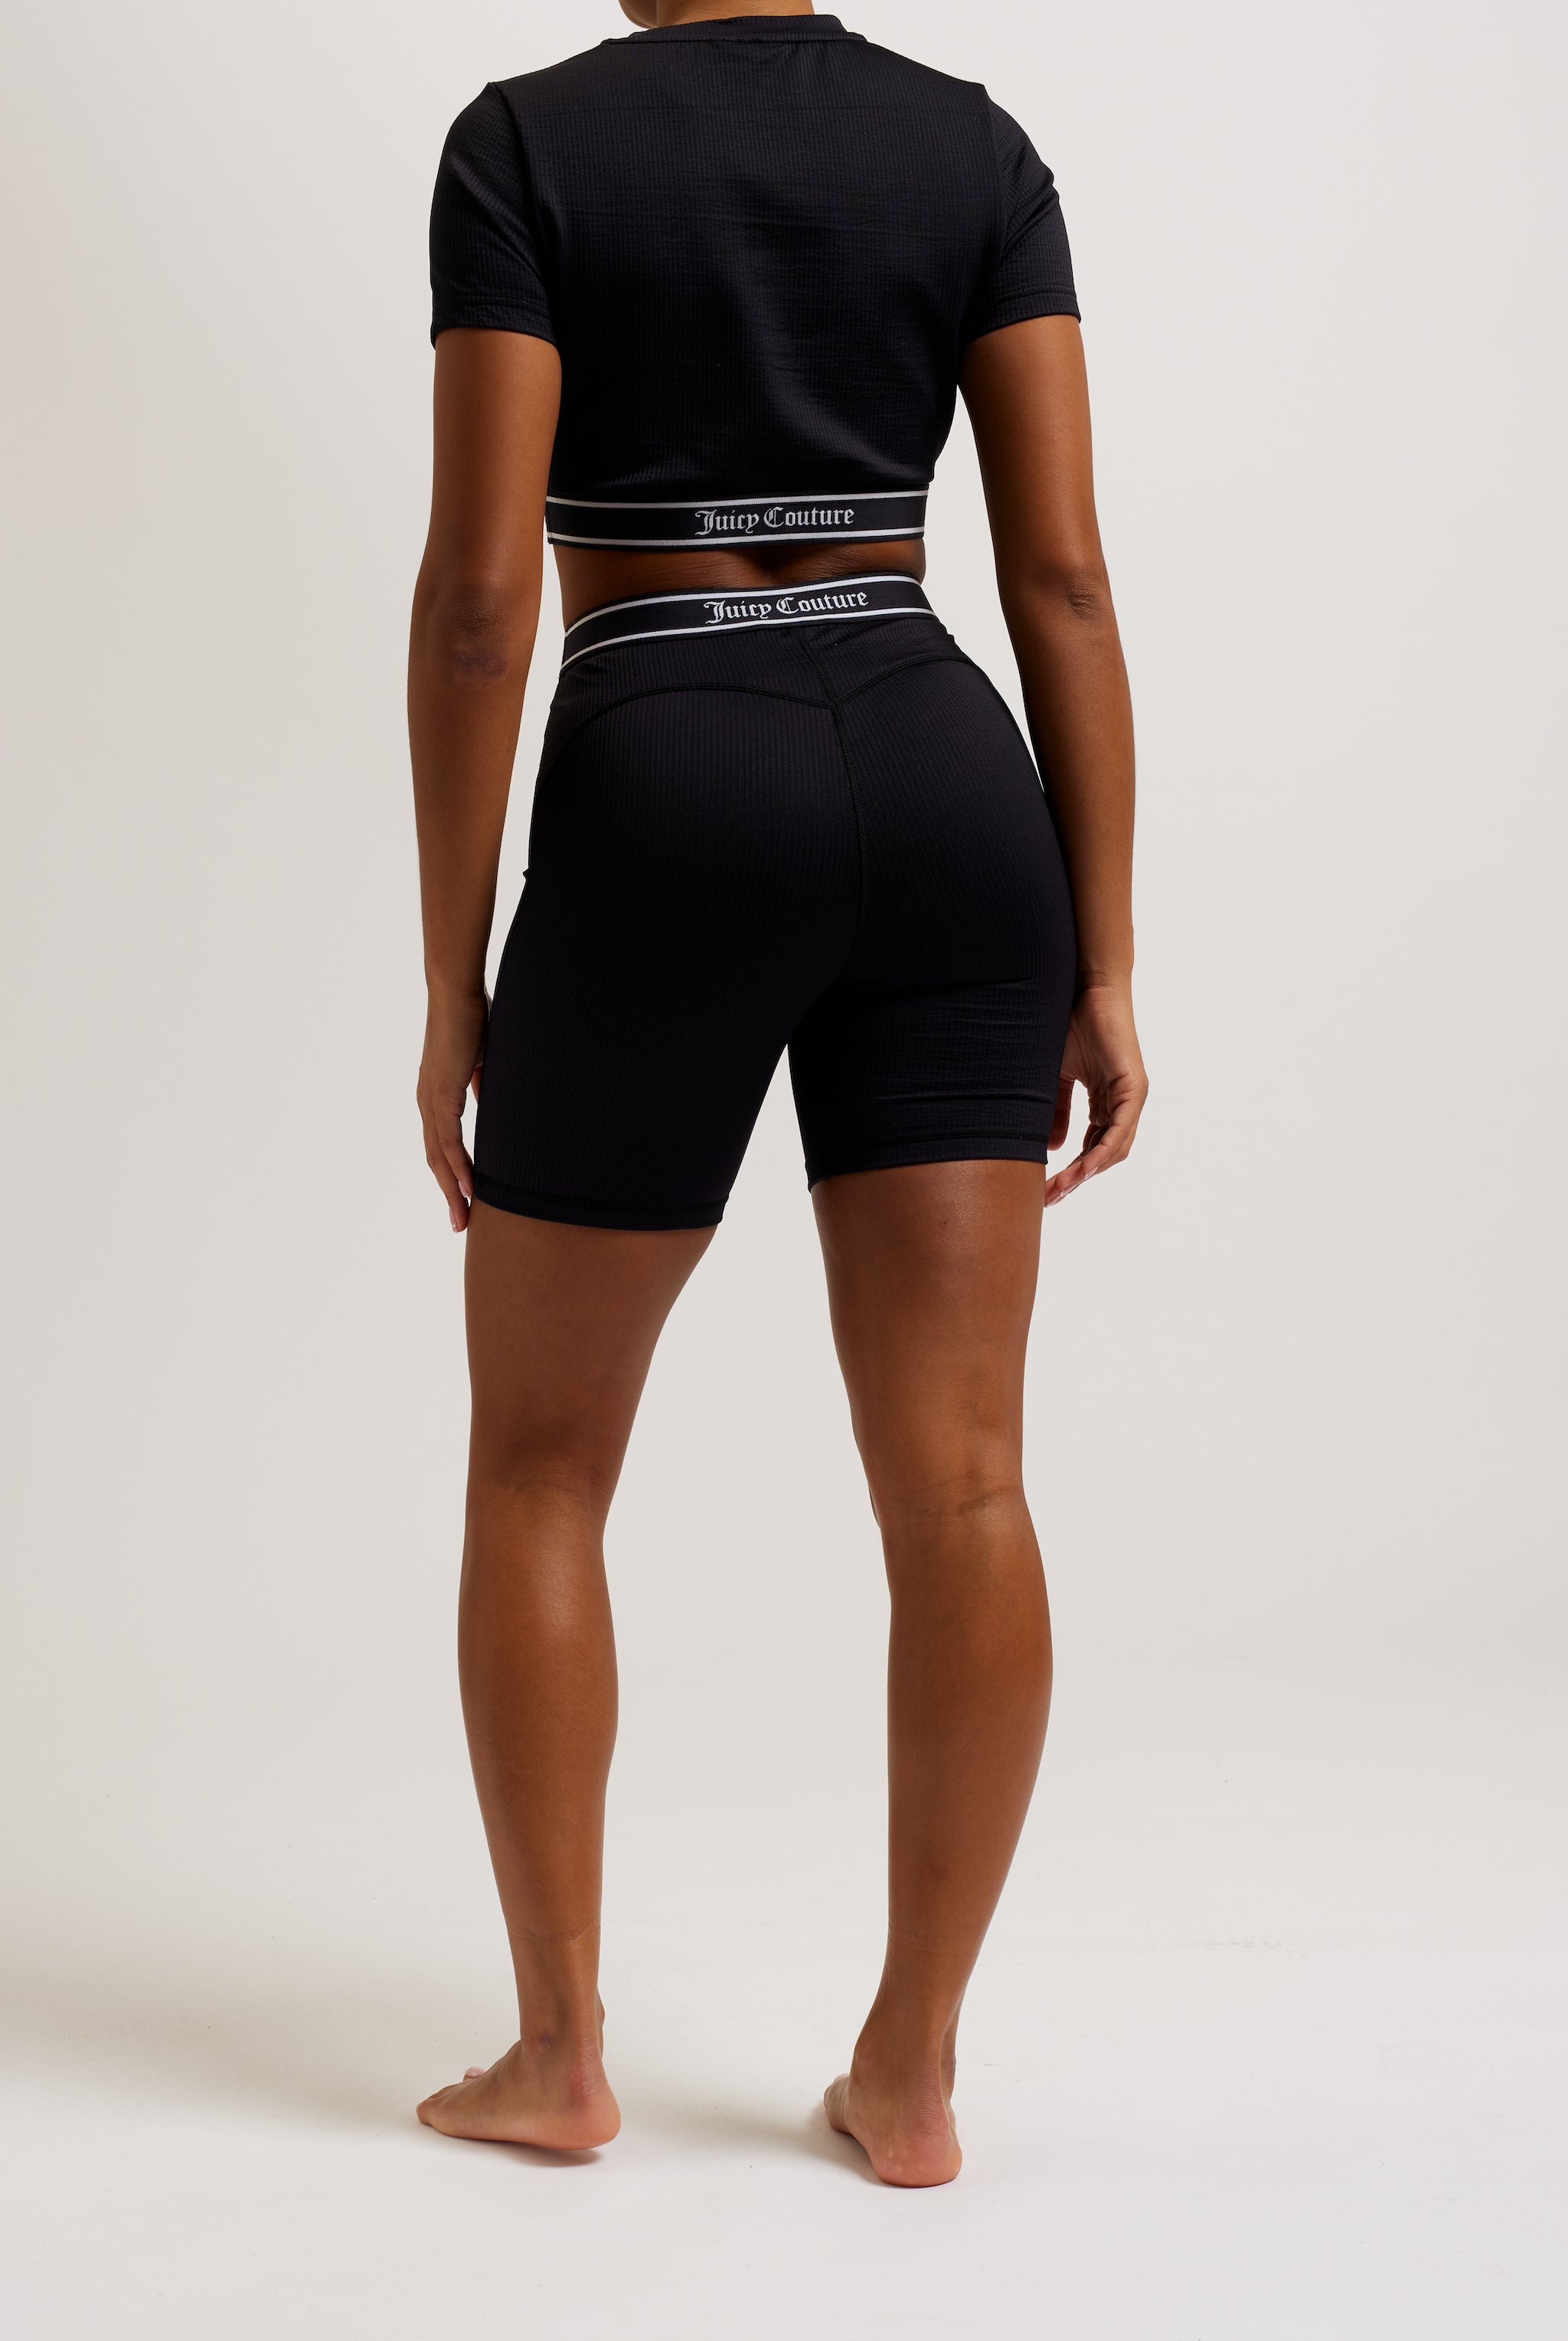 Juicy Couture Sport Leggings | Sports leggings, Juicy couture, Clothes  design